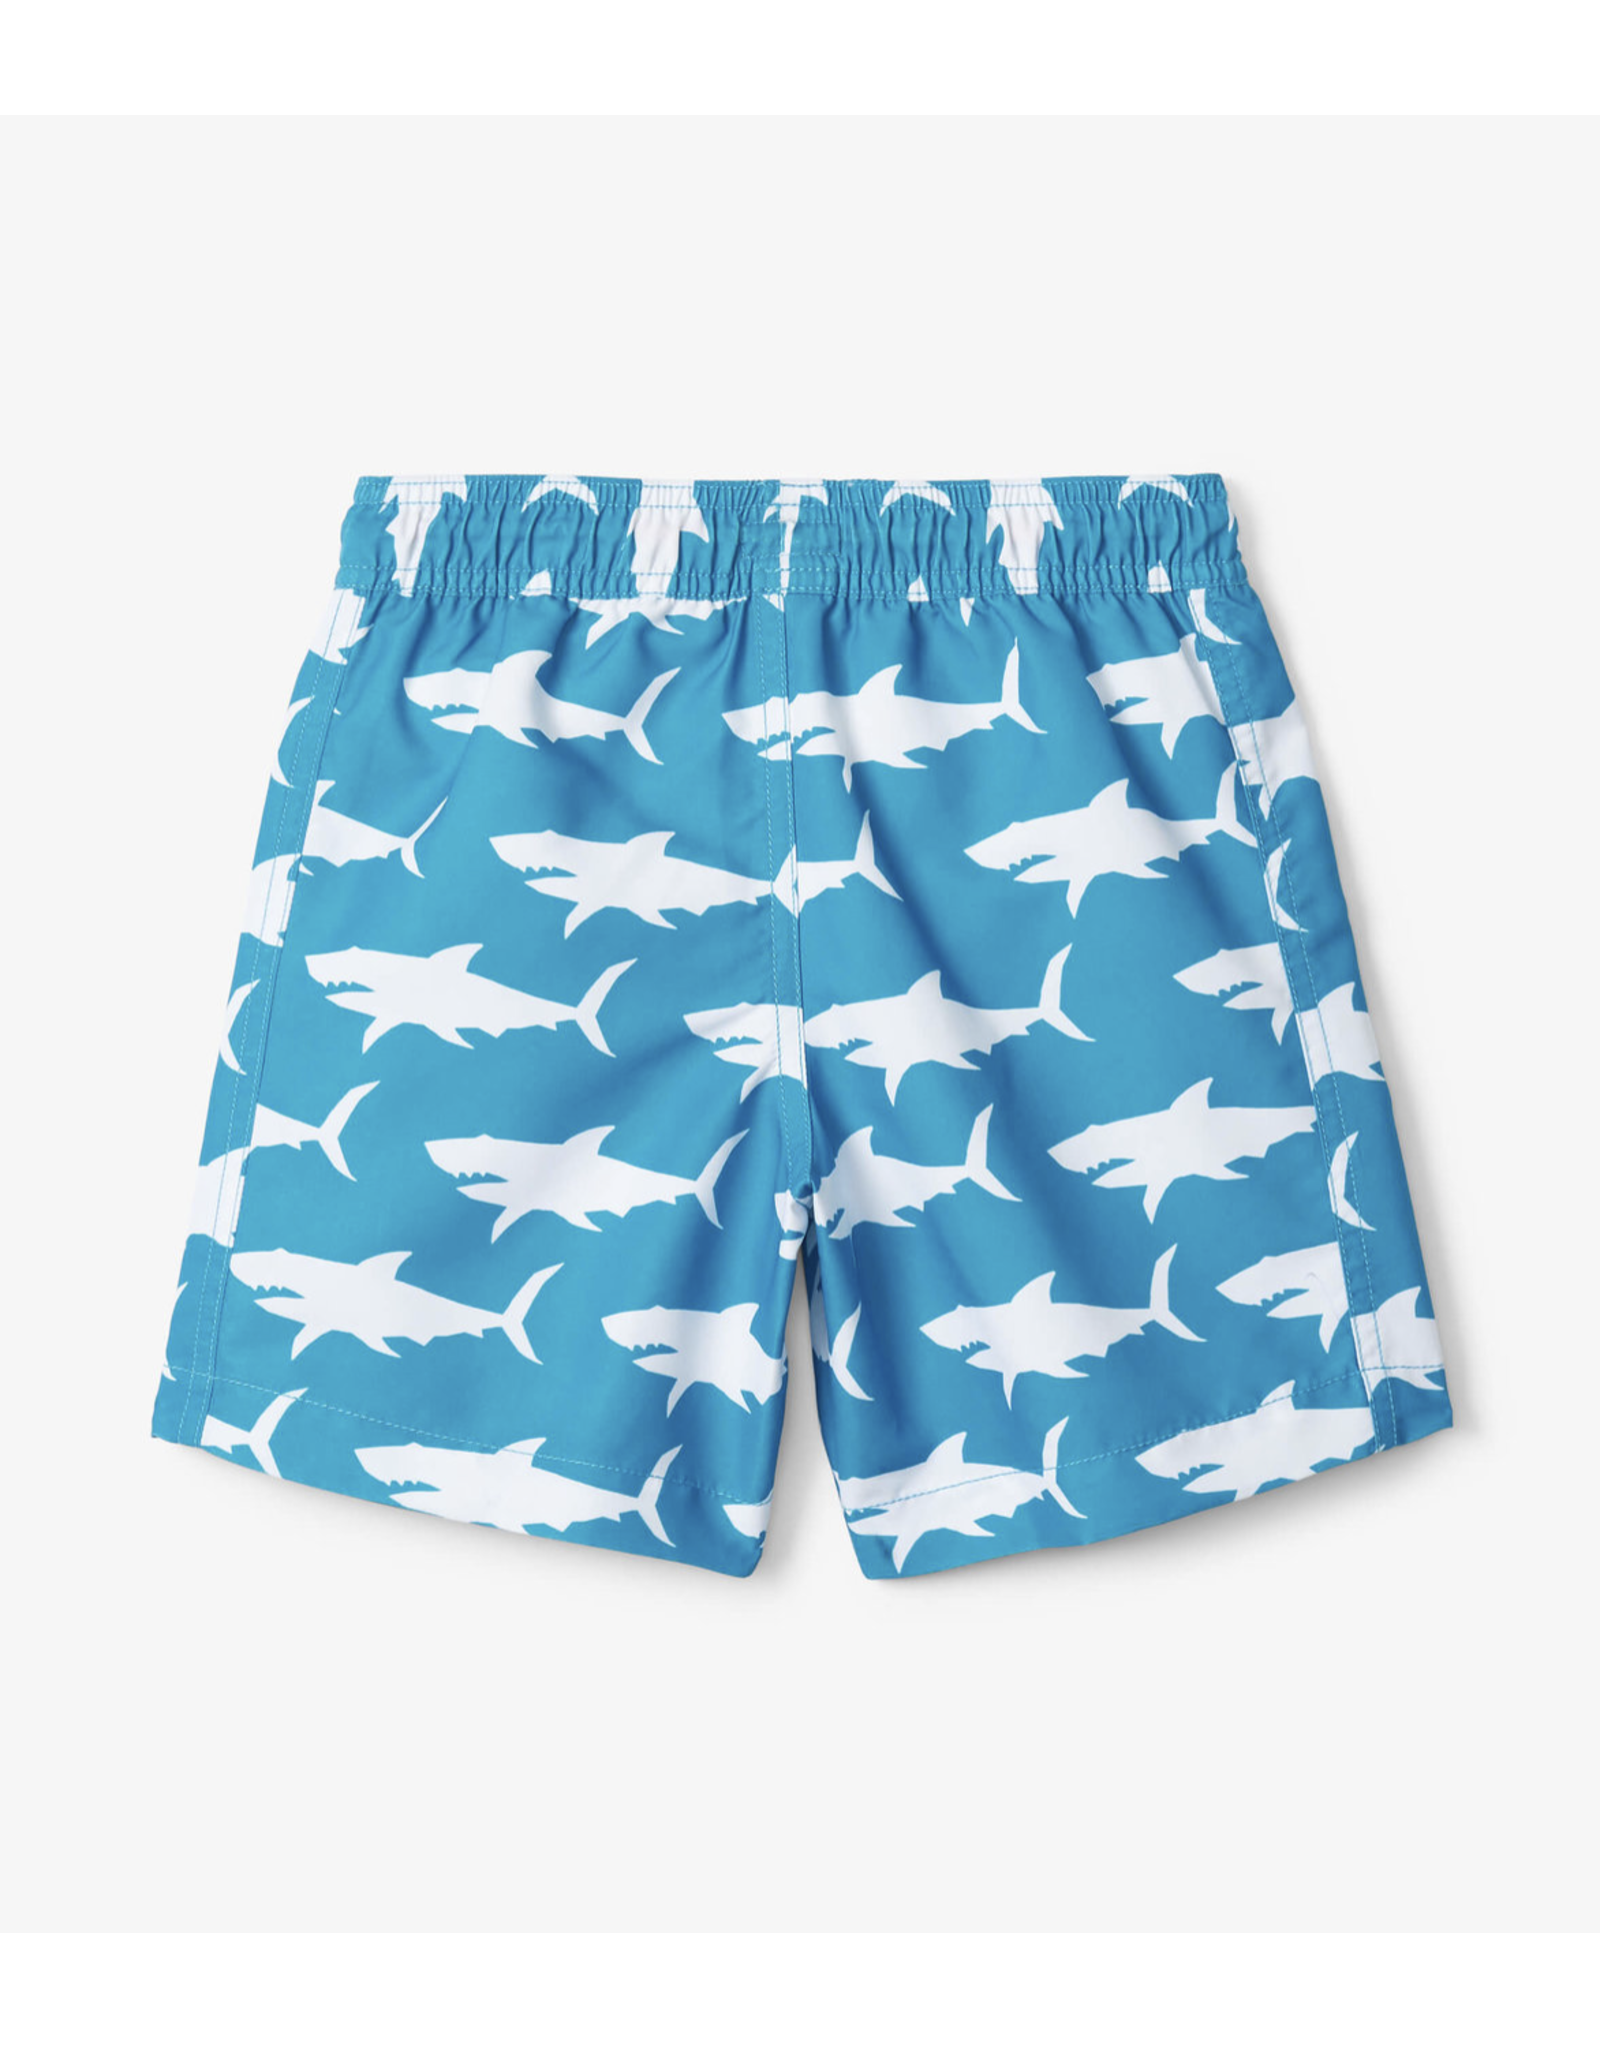 Hatley Hungry Sharks Swim Trunks